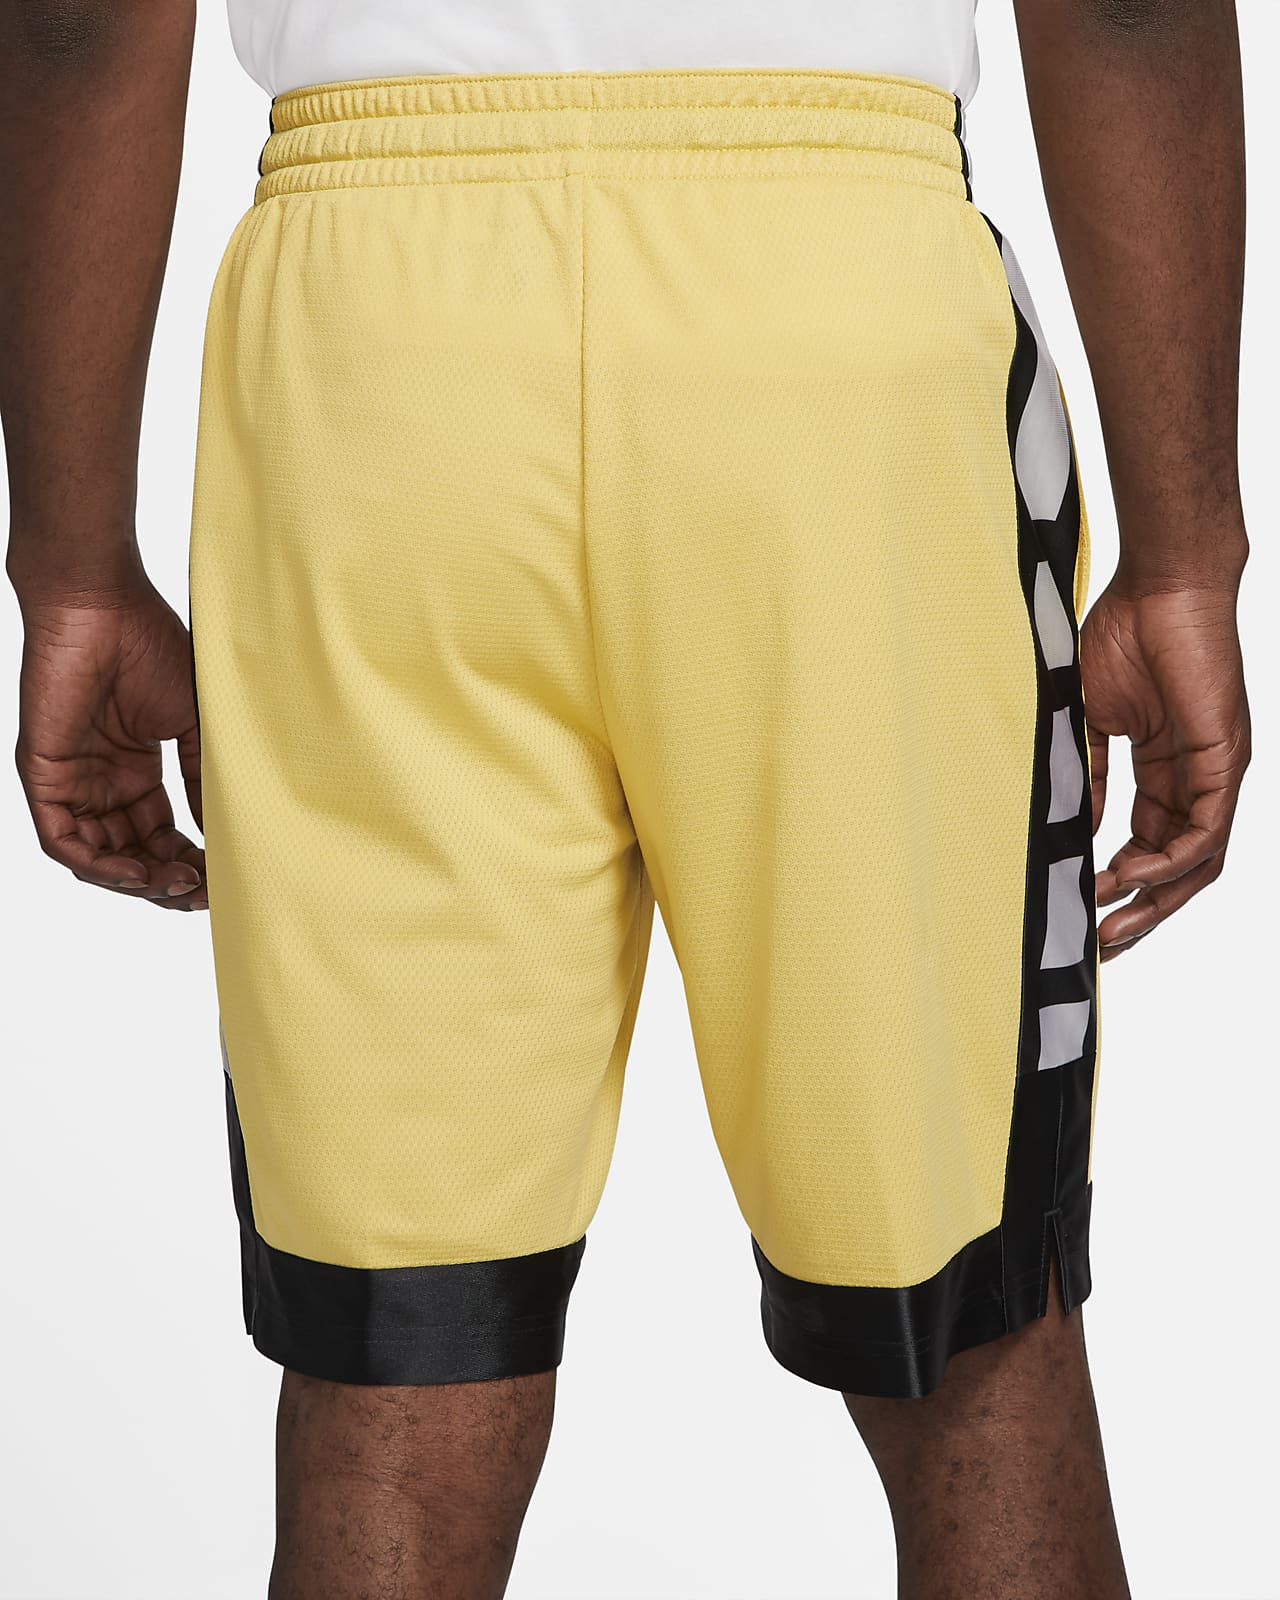 yellow nike basketball shorts